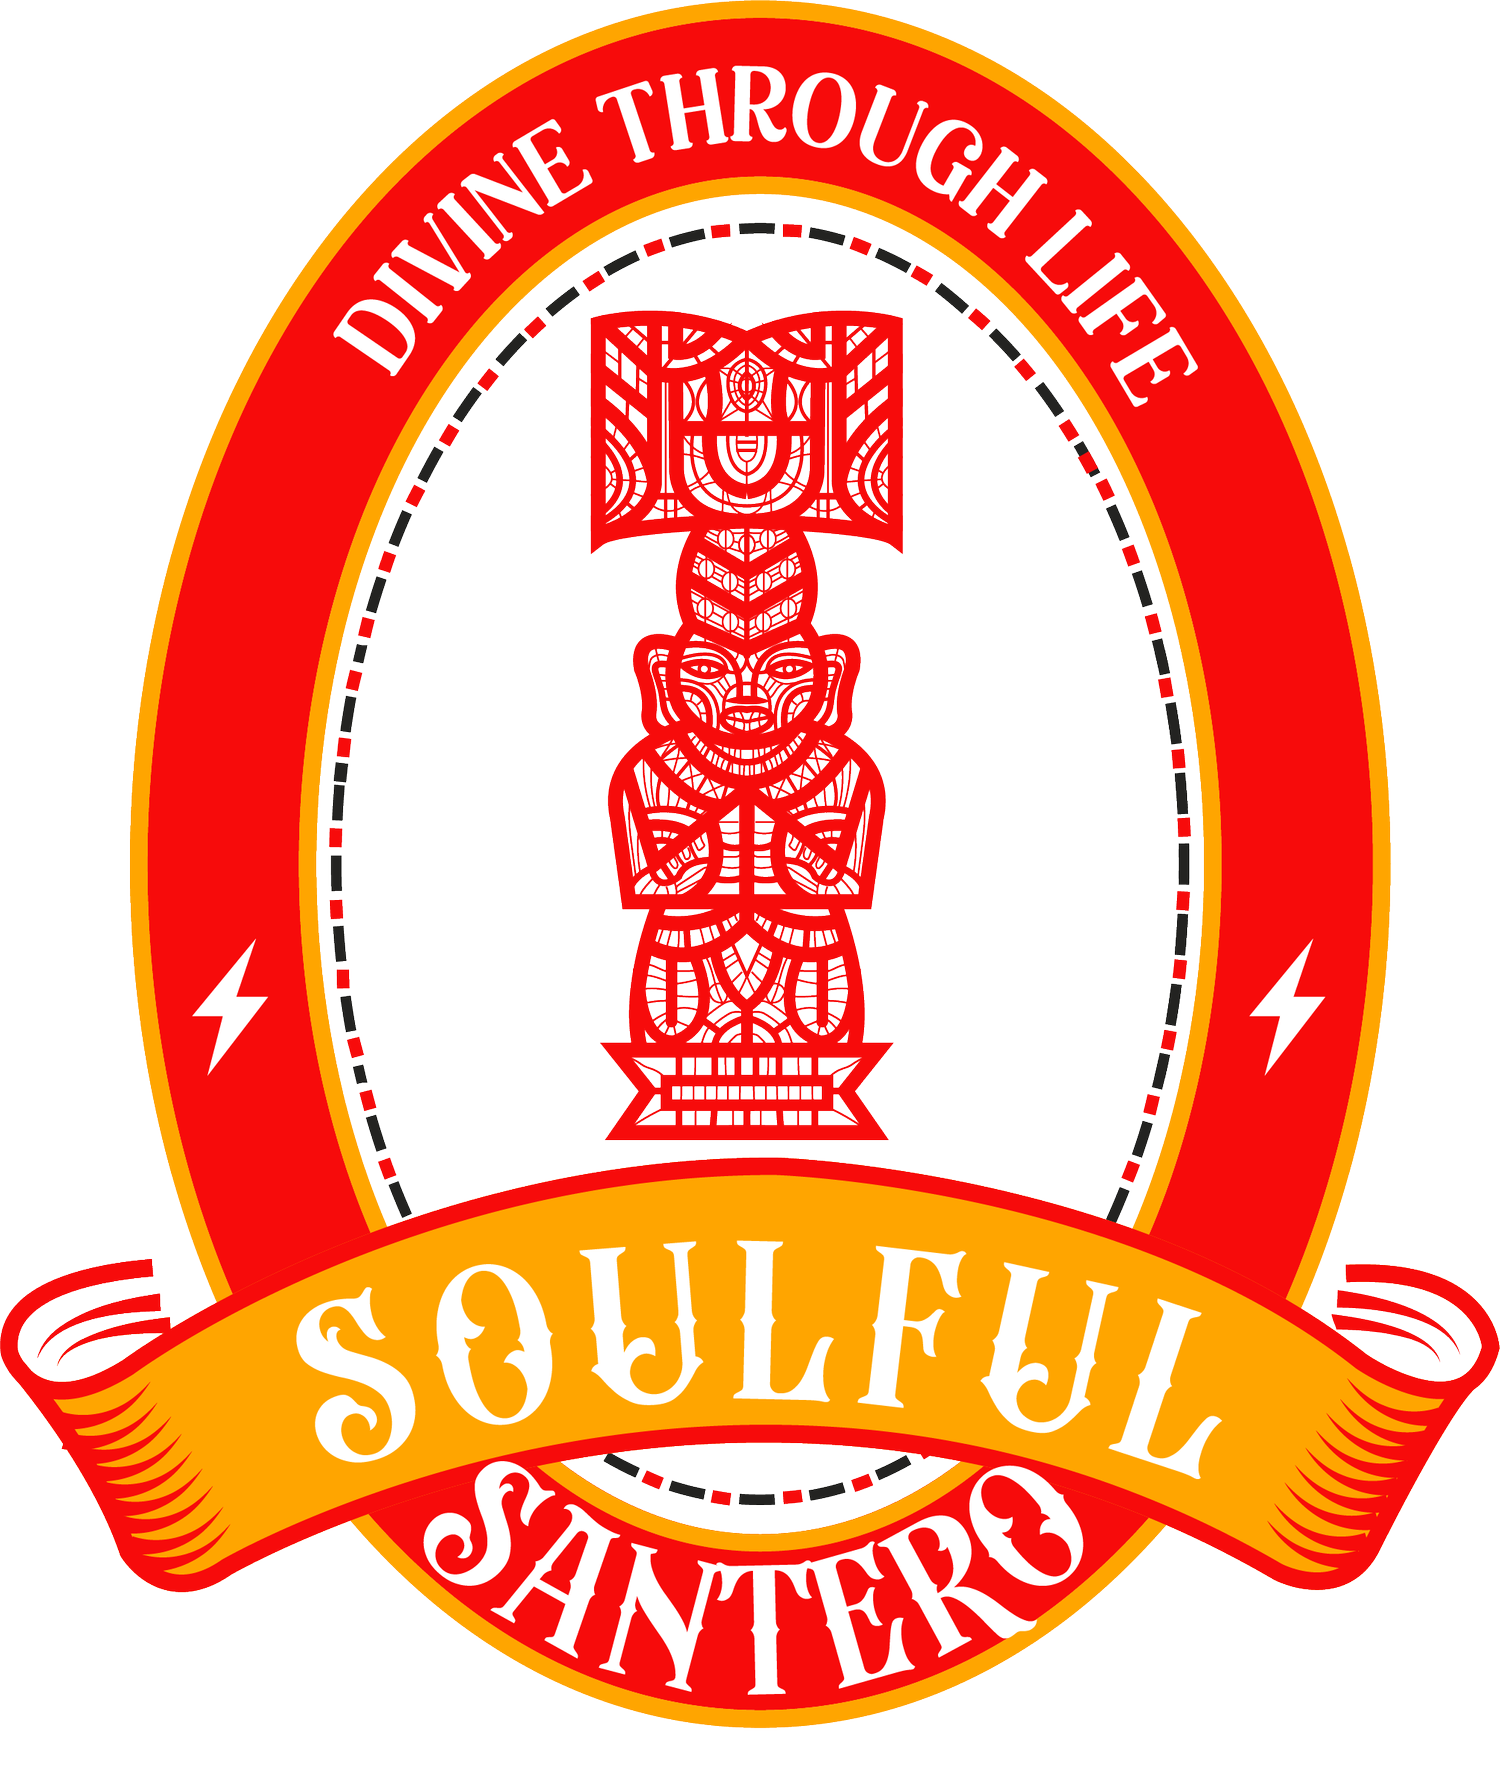 Soulful Santero